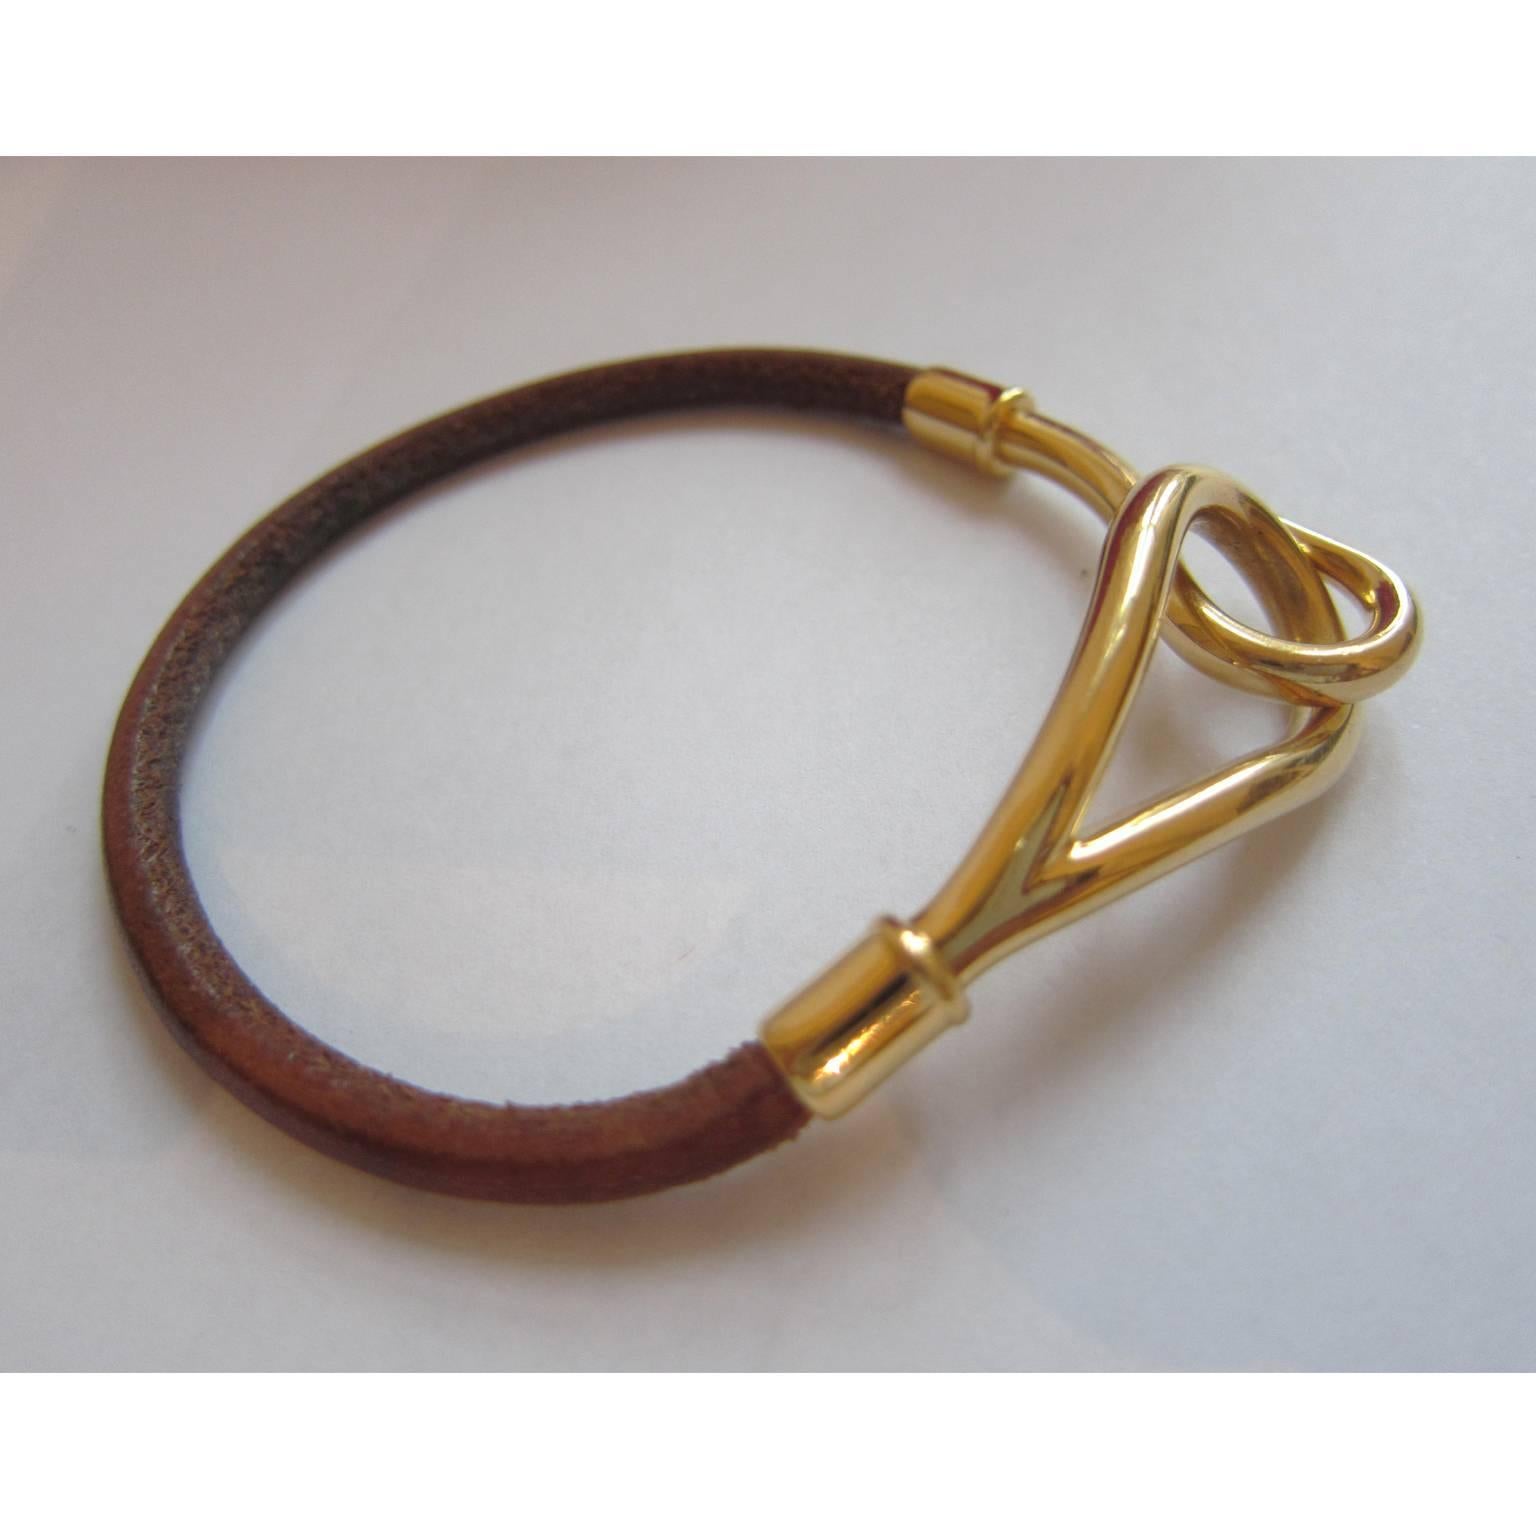 Hermes dark brown leather single wrap bracelet. Gold tone hardware hook closure, HERMES logo embossed. 

Total length : 18.5 cm
